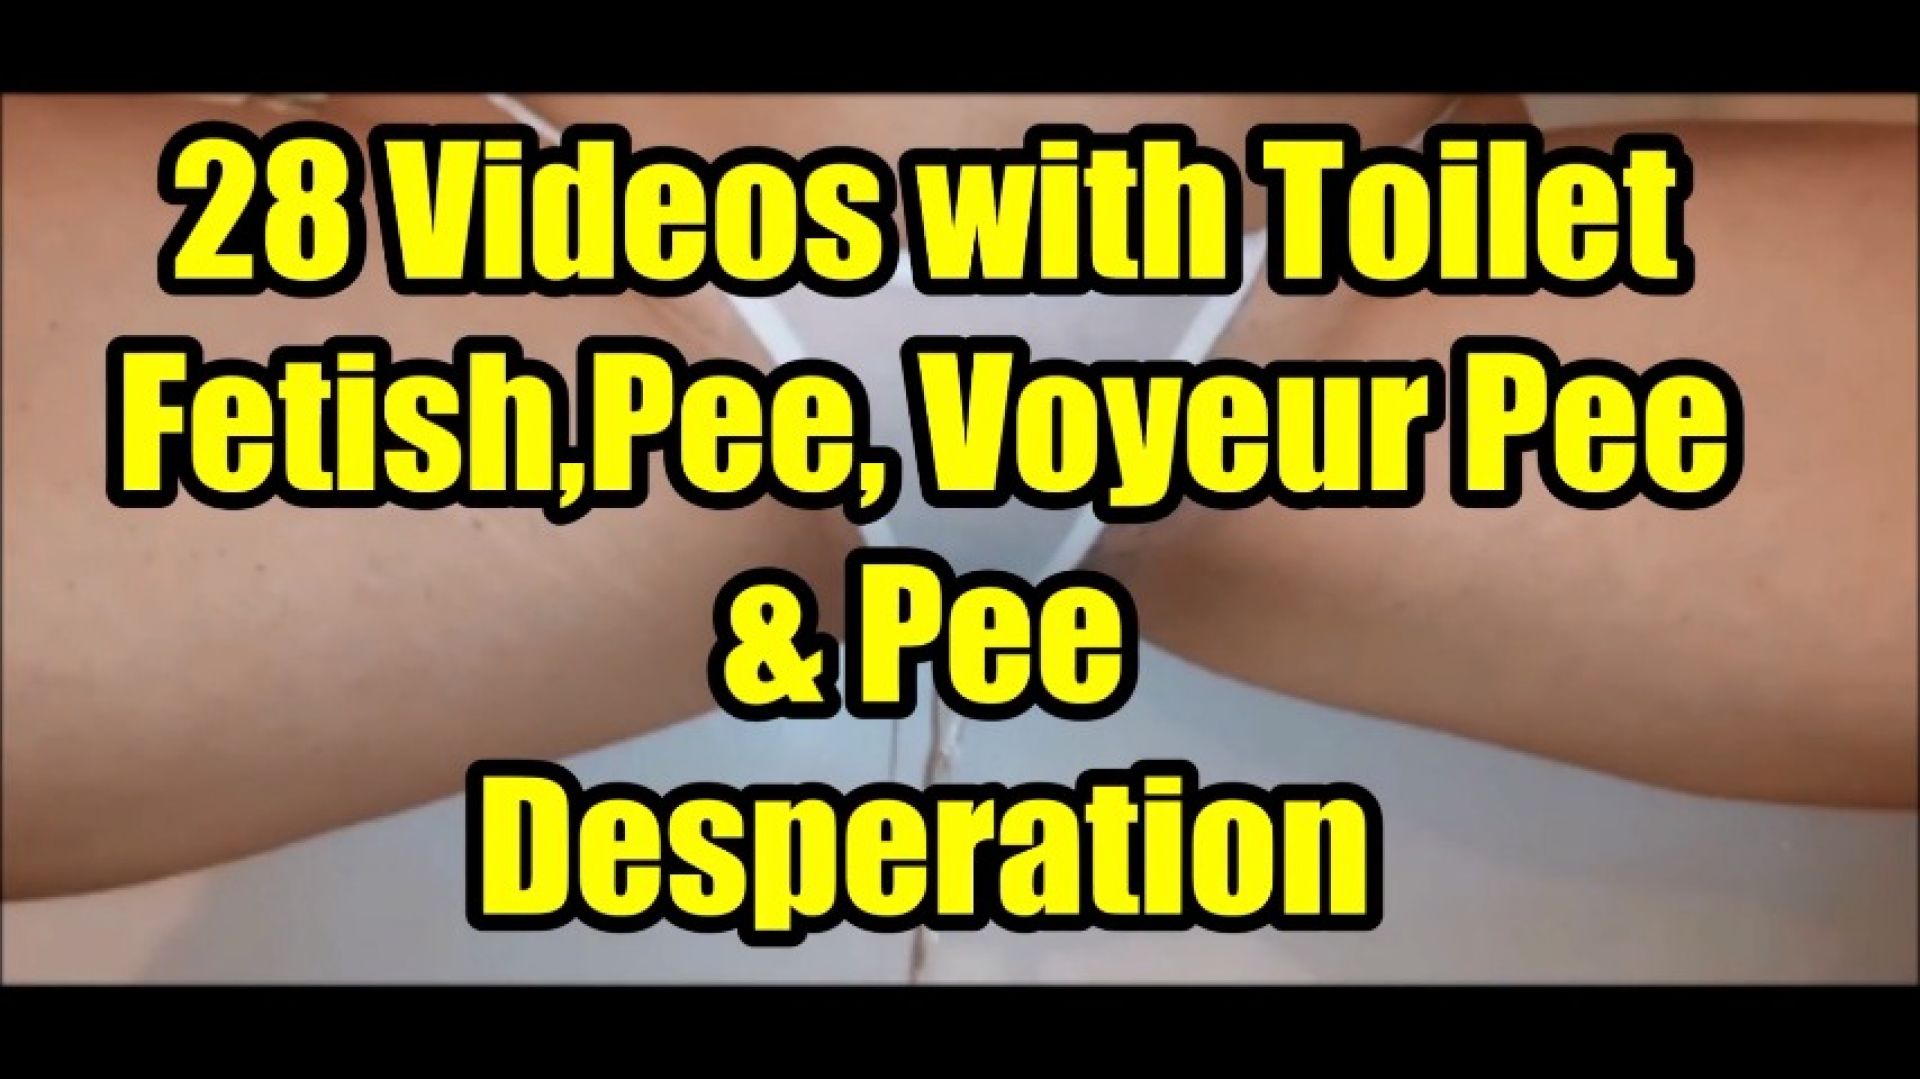 leaked 28 VIDEOS OF TOILET FETISH, VOYEUR PEE, and PEE DESPERATION thumbnail